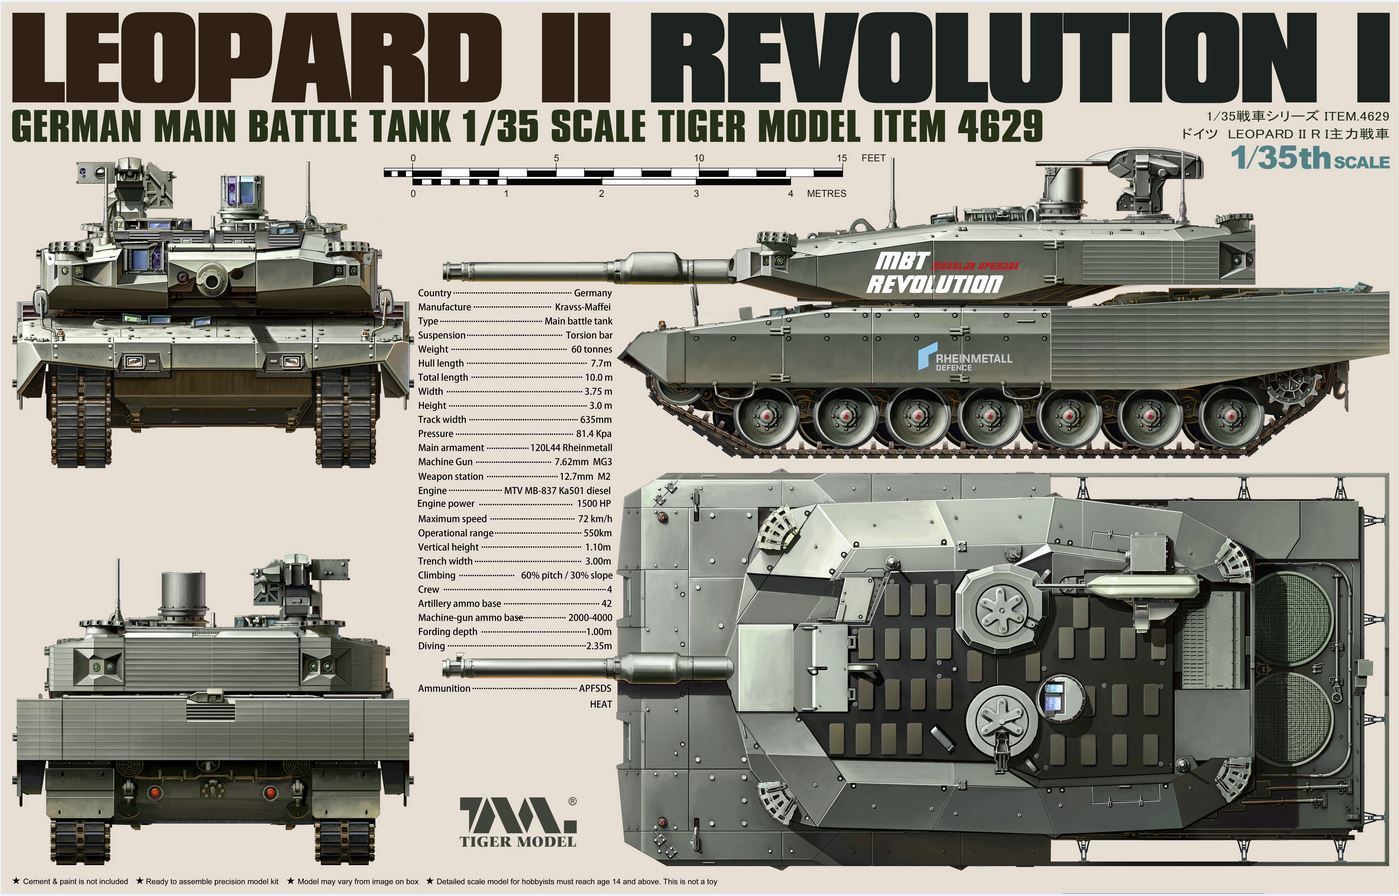 1/35 German Leopard 2 Revolution-I MBT - Click Image to Close